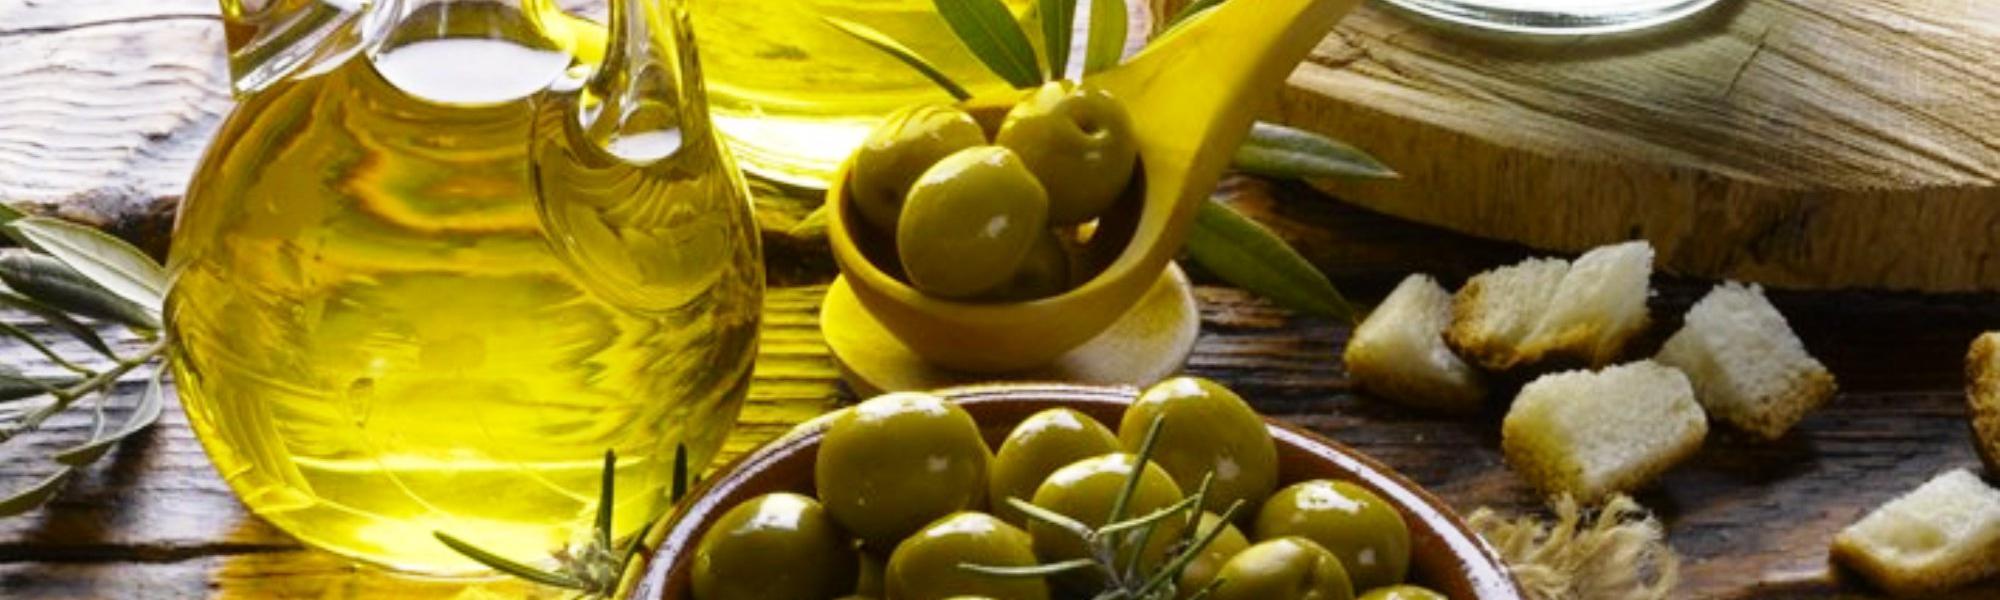 Extra virgin olive oil tasting for groups in Ostuni, Puglia  - Agriturismo Salinola Puglia  0